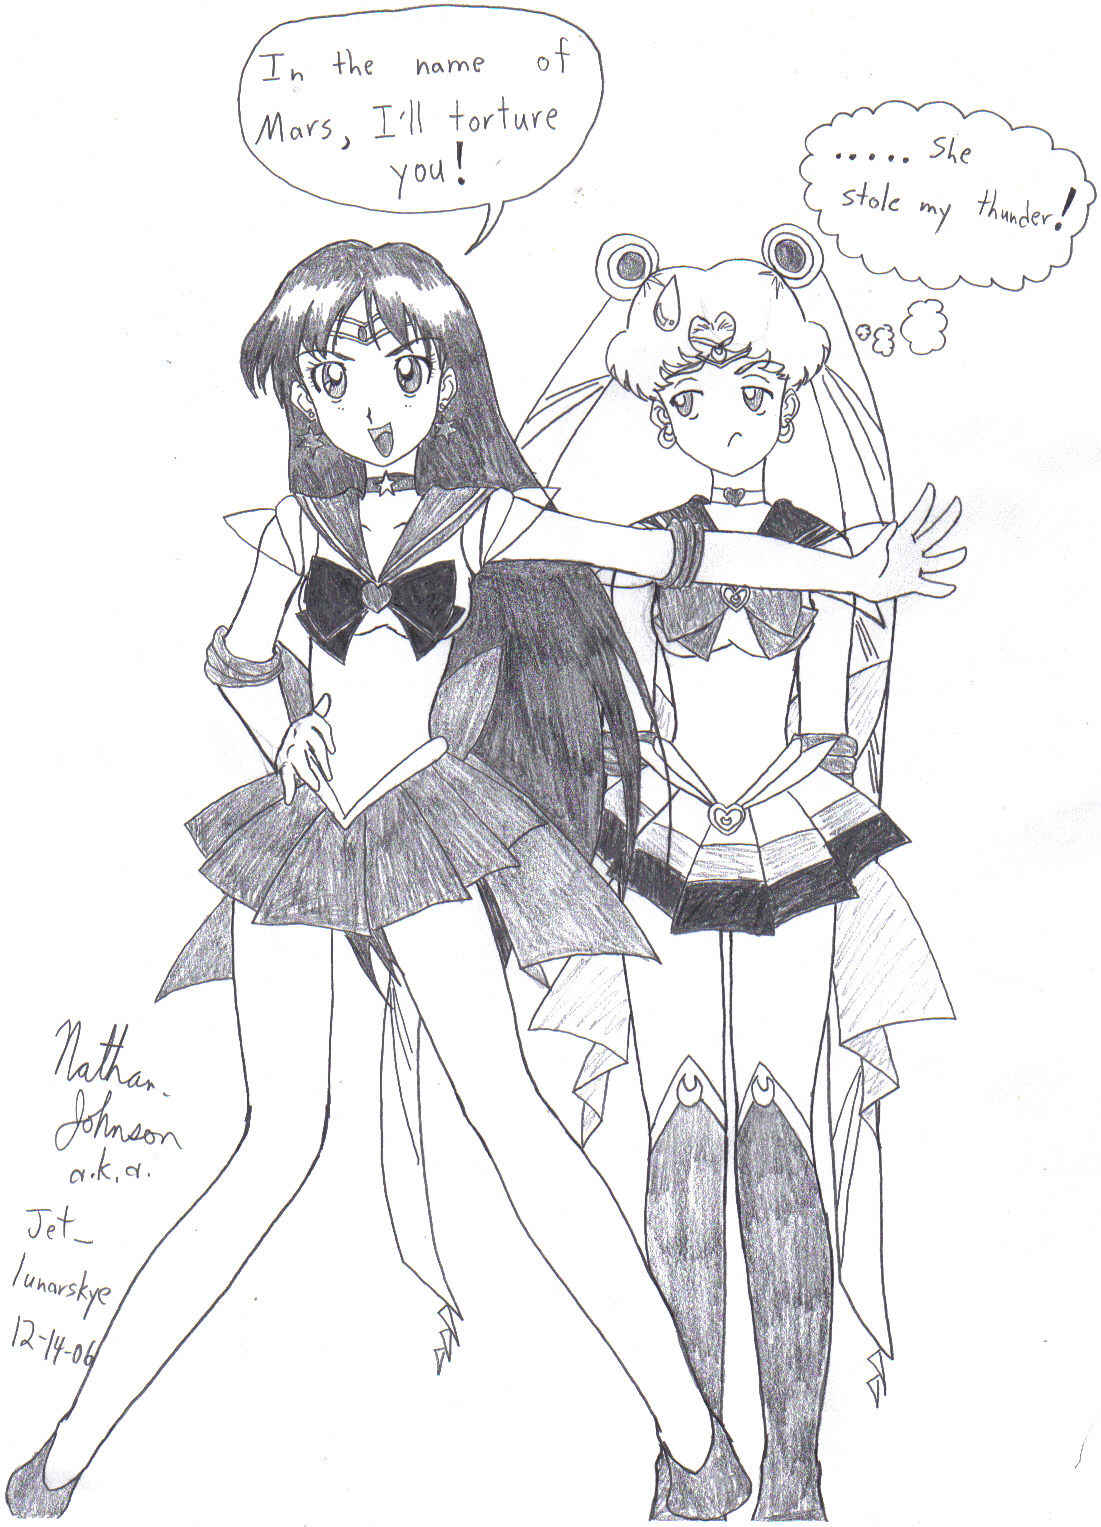 Stole Sailor Moon's thunder by Jet_lunarskye